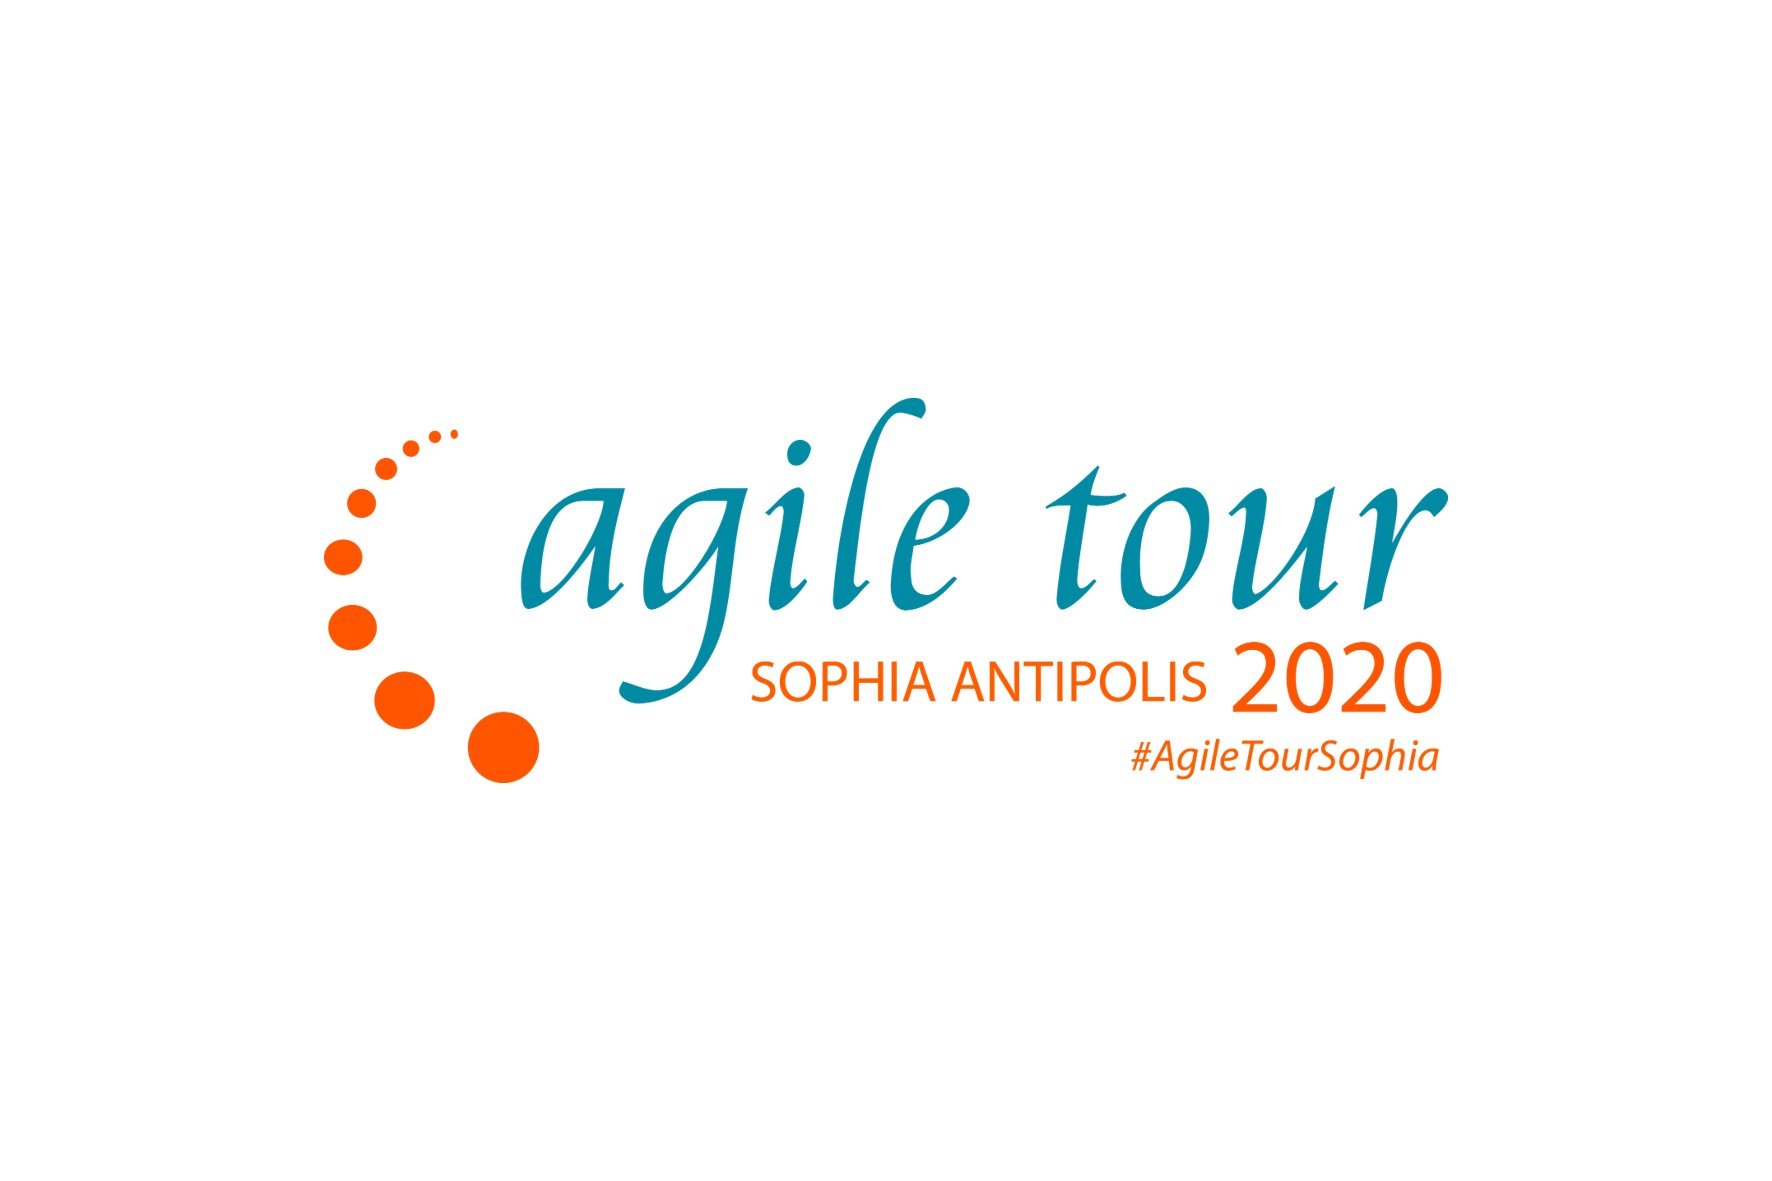 talan-partenaire-agile-tour-2020-sophia-antipolis.jpg